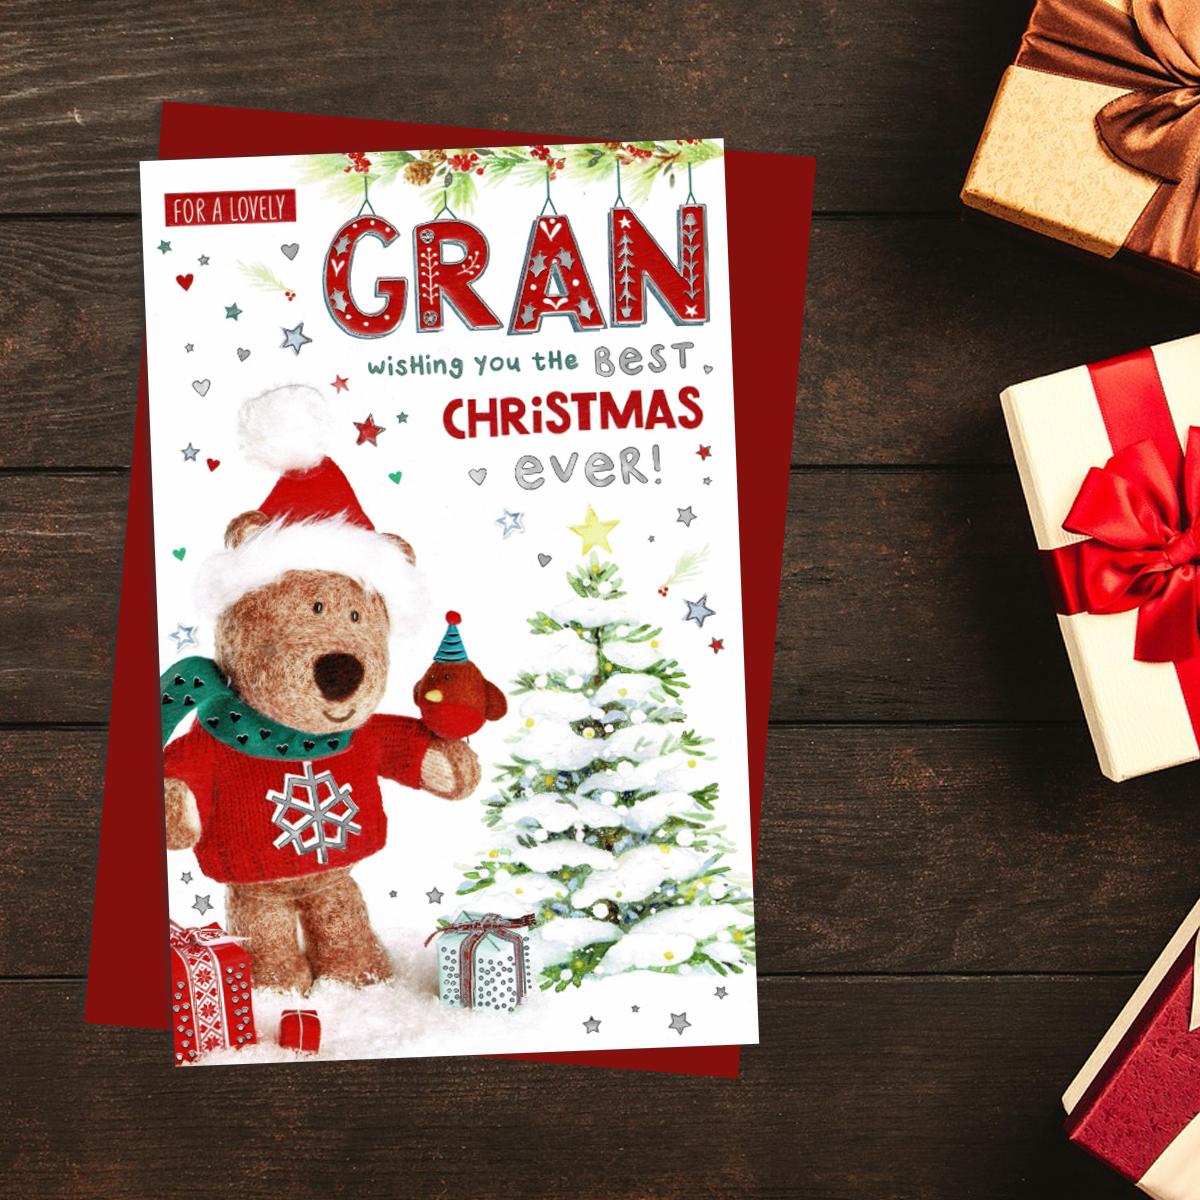 Gran Christmas Card Alongside Its Red Envelope